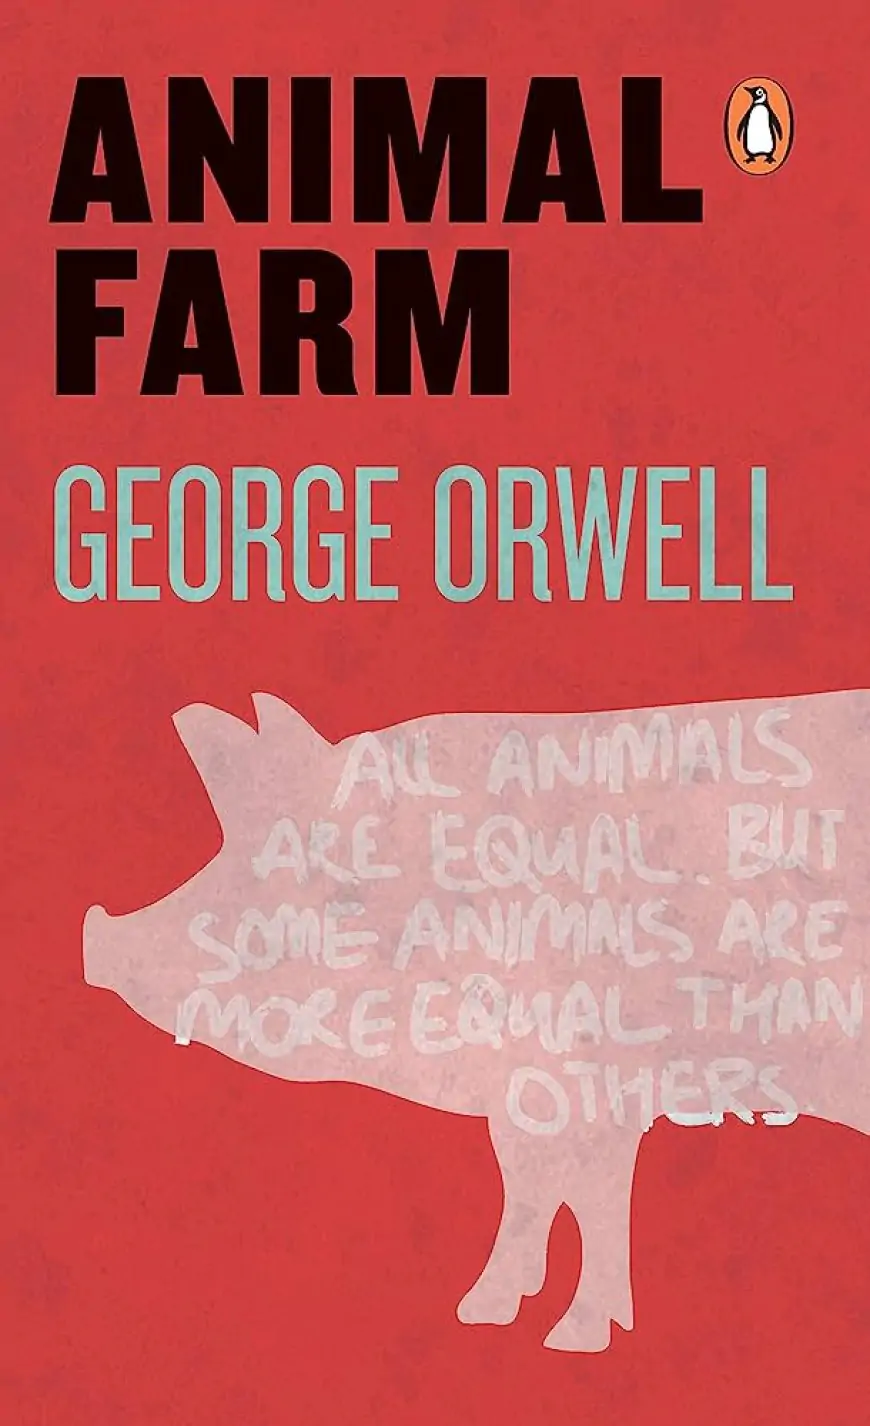 Livro Animal Farm em inglês